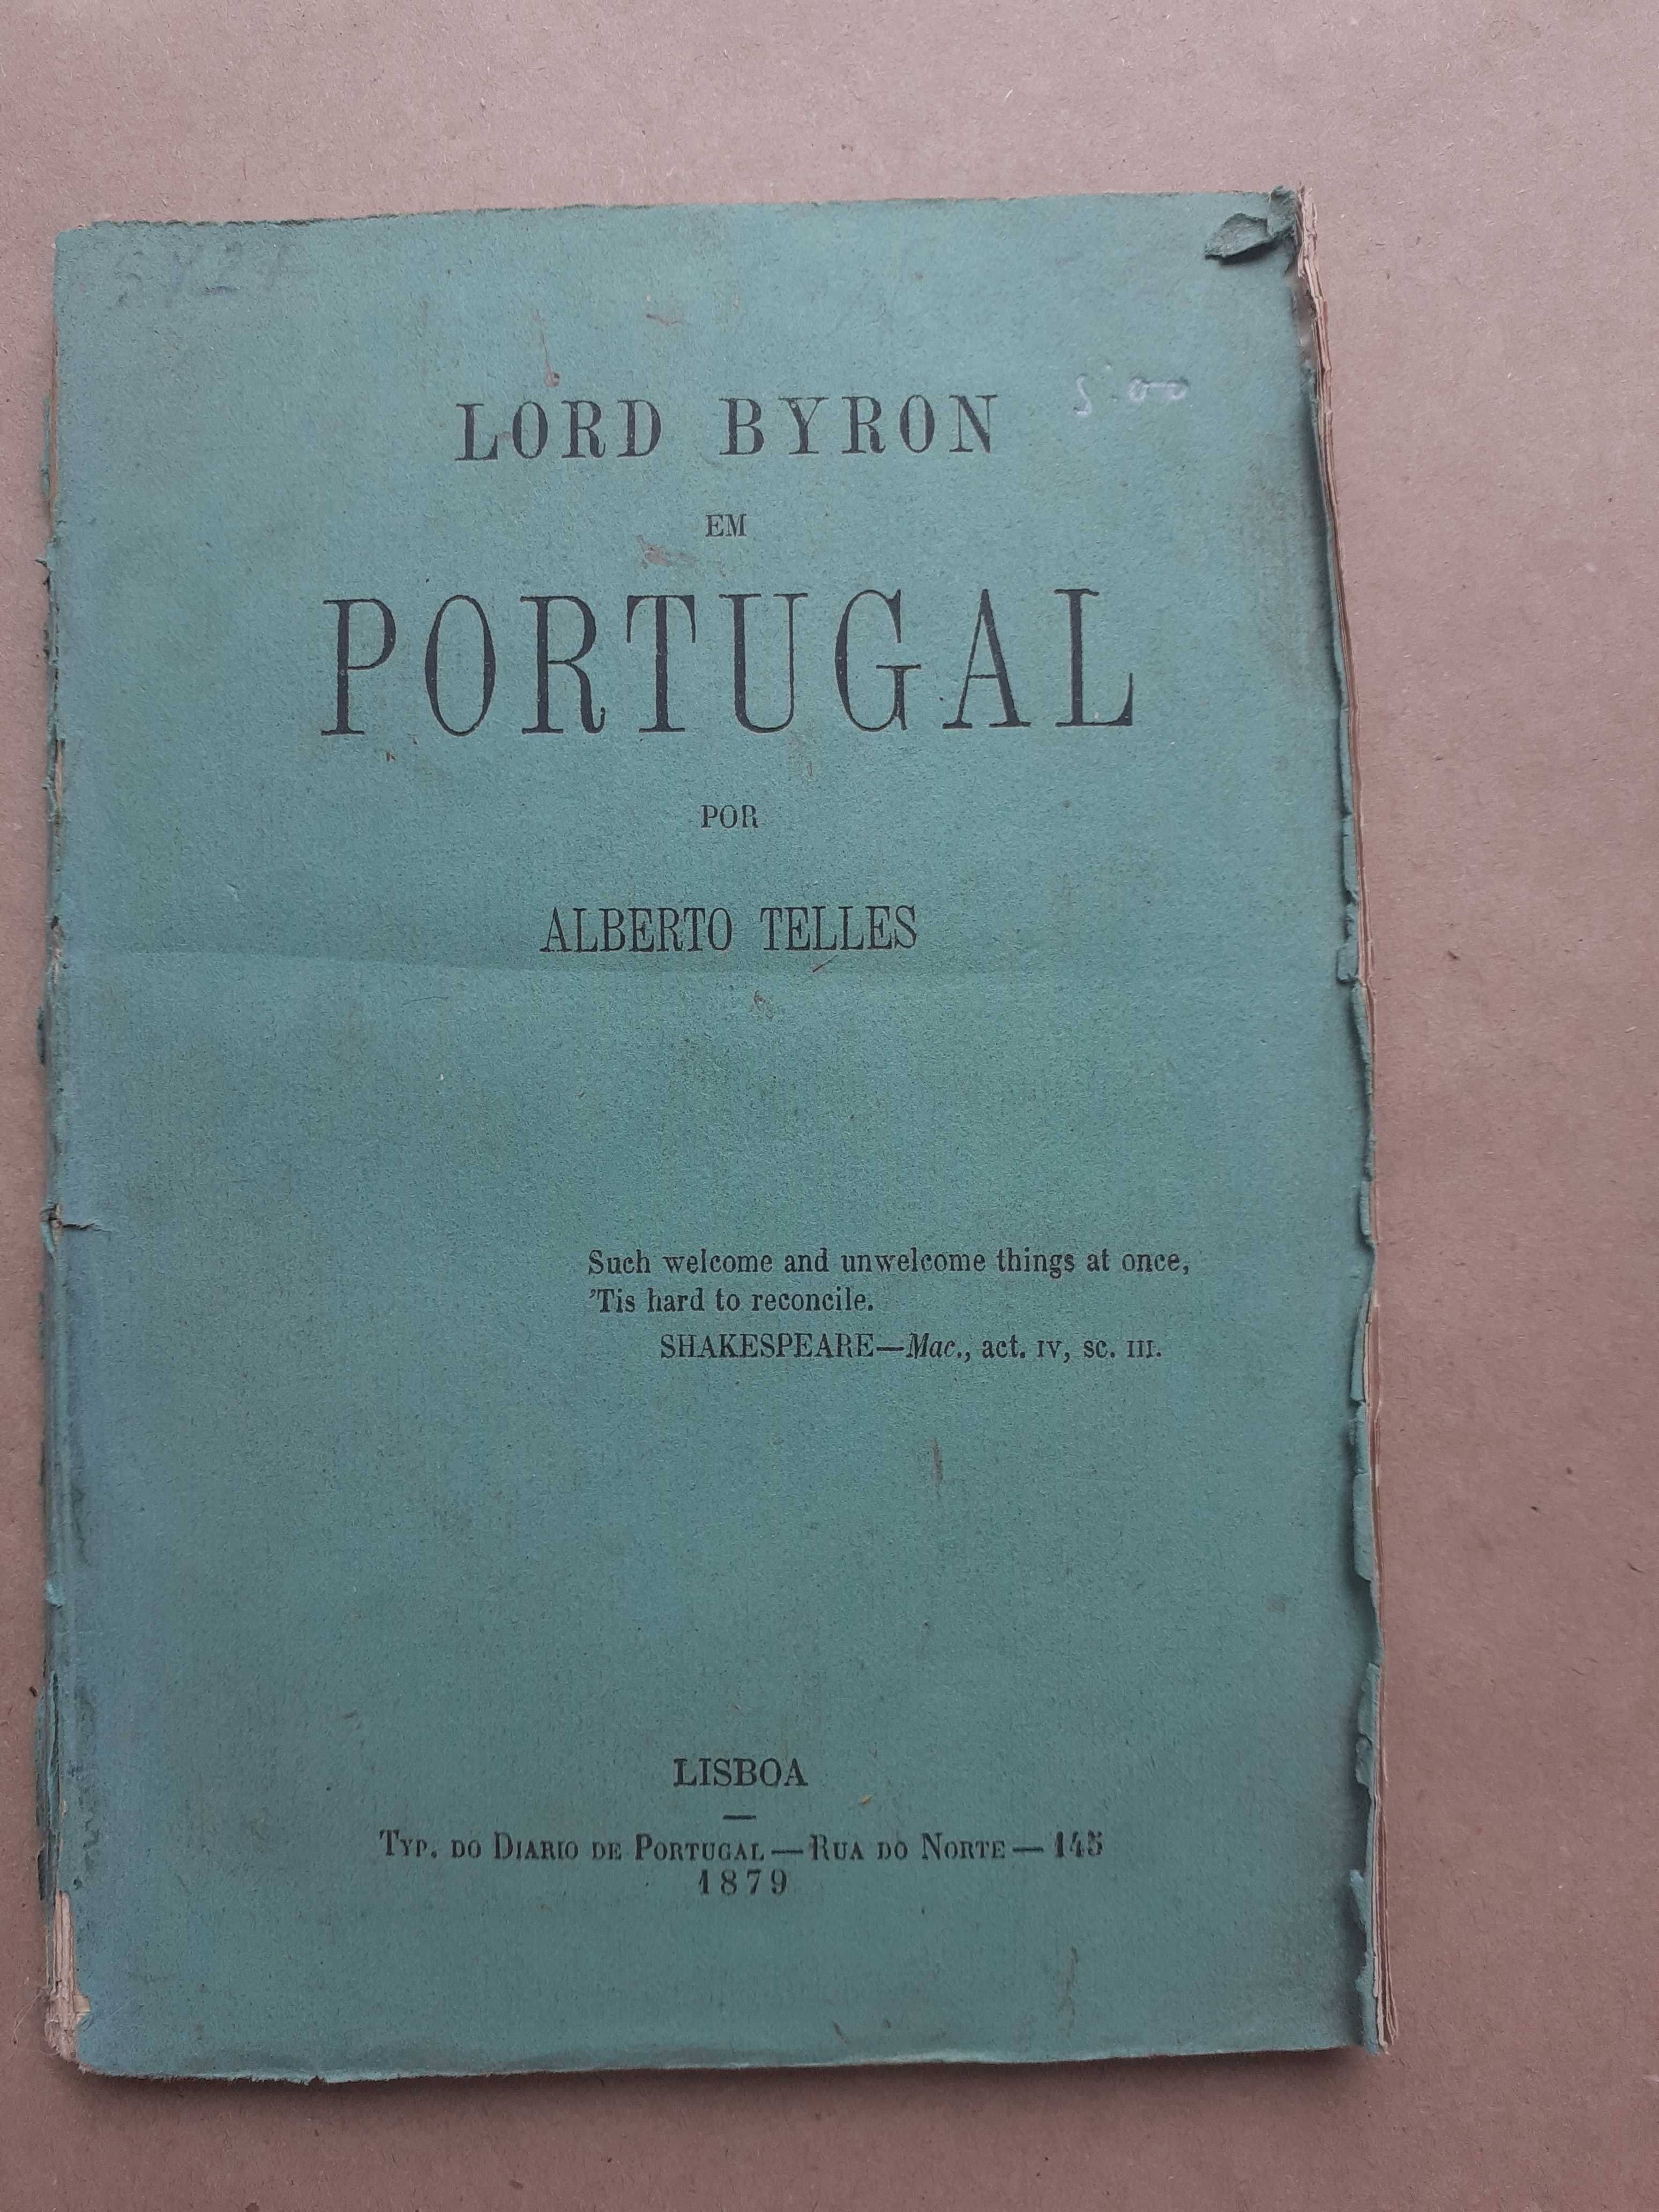 Lord Byron em Portugal - Leilão João Chagas